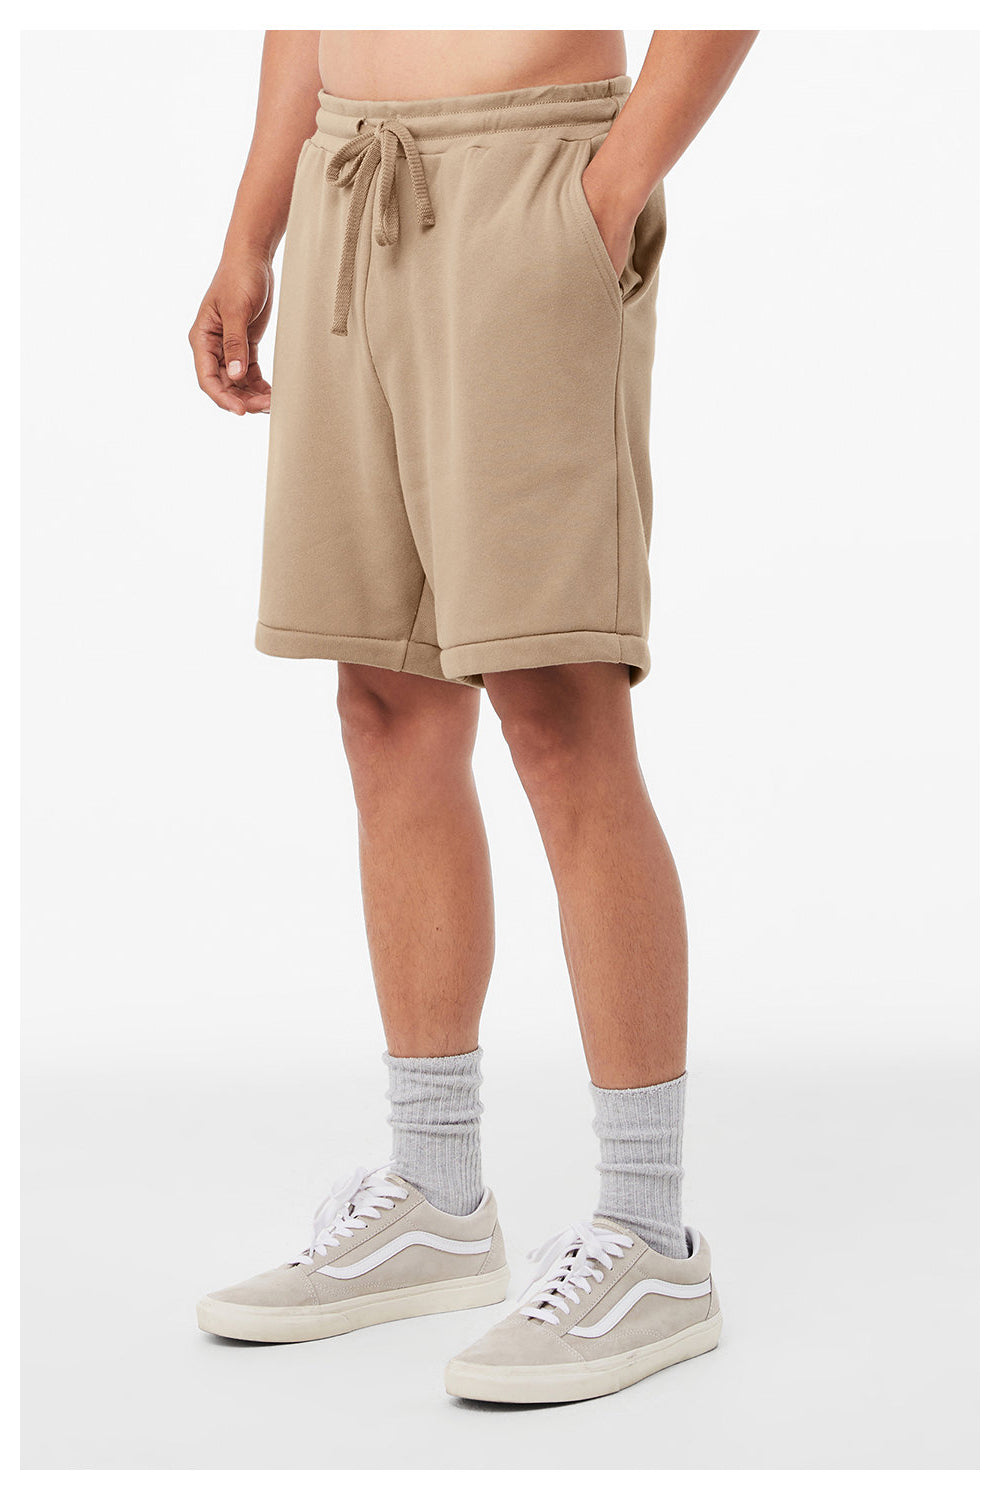 Bella + Canvas 3724 Mens Shorts w/ Pockets Tan Model Side